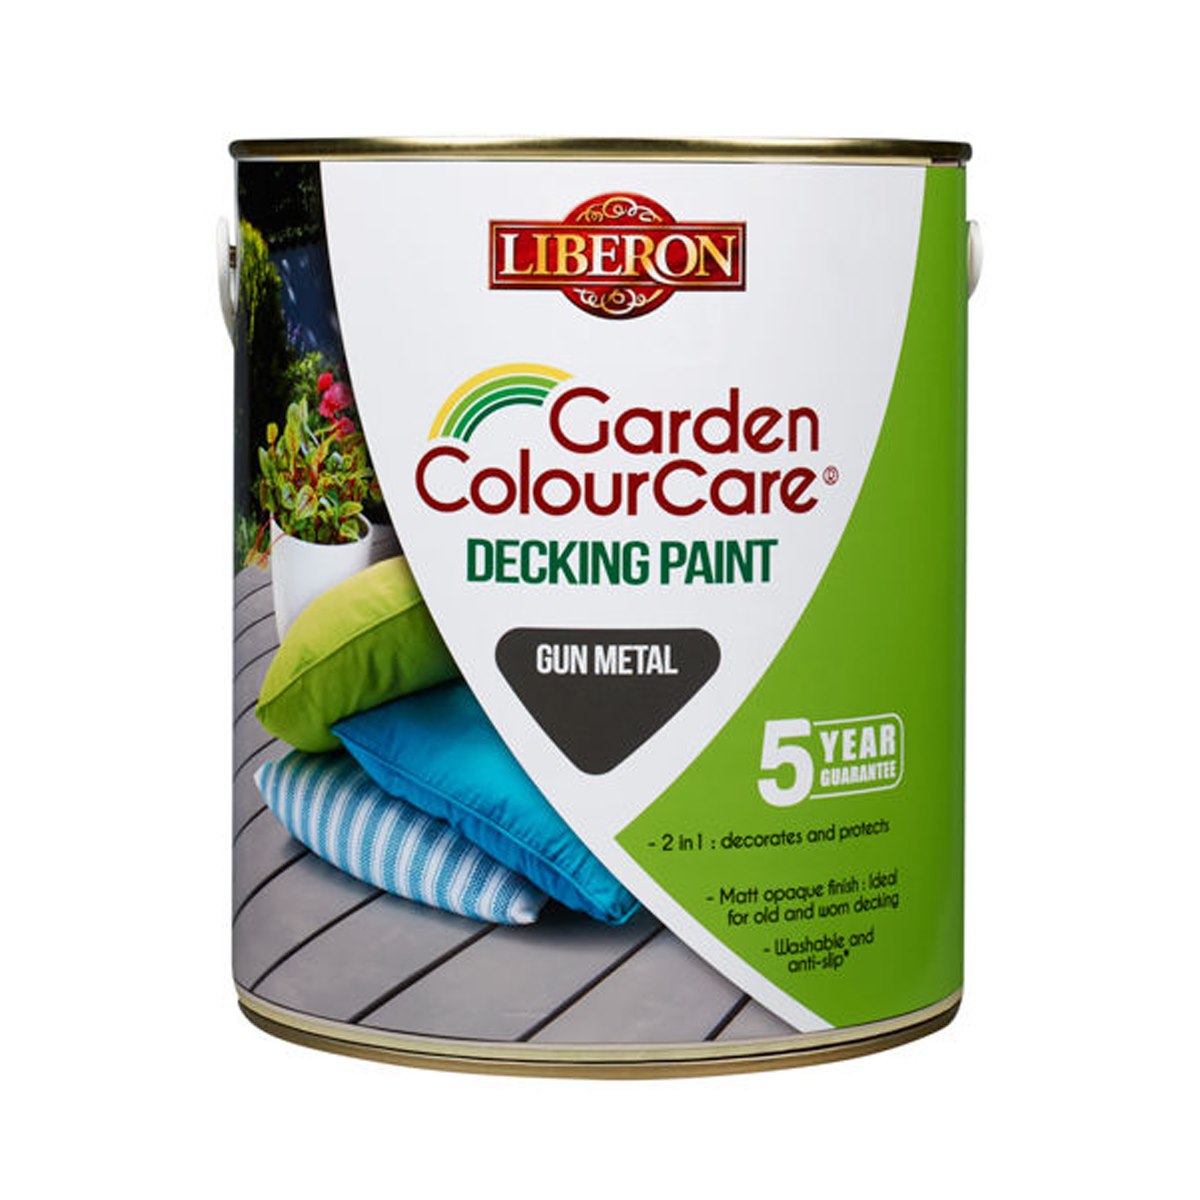 Liberon Garden ColourCare Decking Paint Gun Metal 2.5 Litre